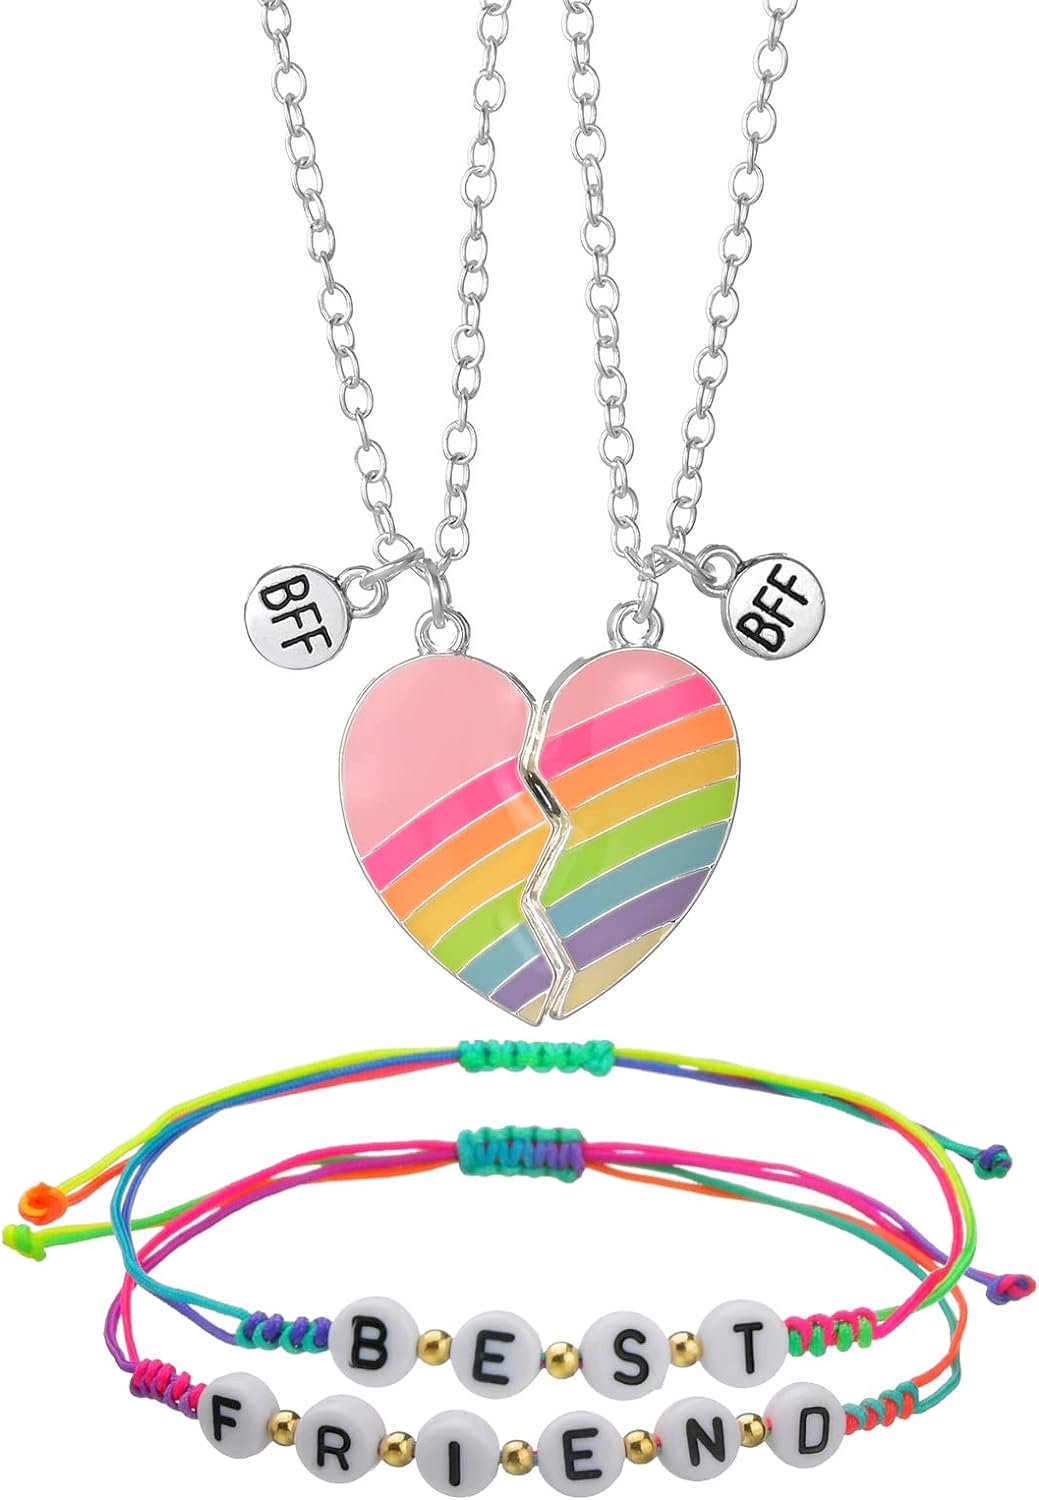 PESOENTH Personalized Name Best Friend Bracelets BBF Friendship Jewelry  Gifts, Customized Enagraved Heart Charms Bracelets for Women Girls Birthday